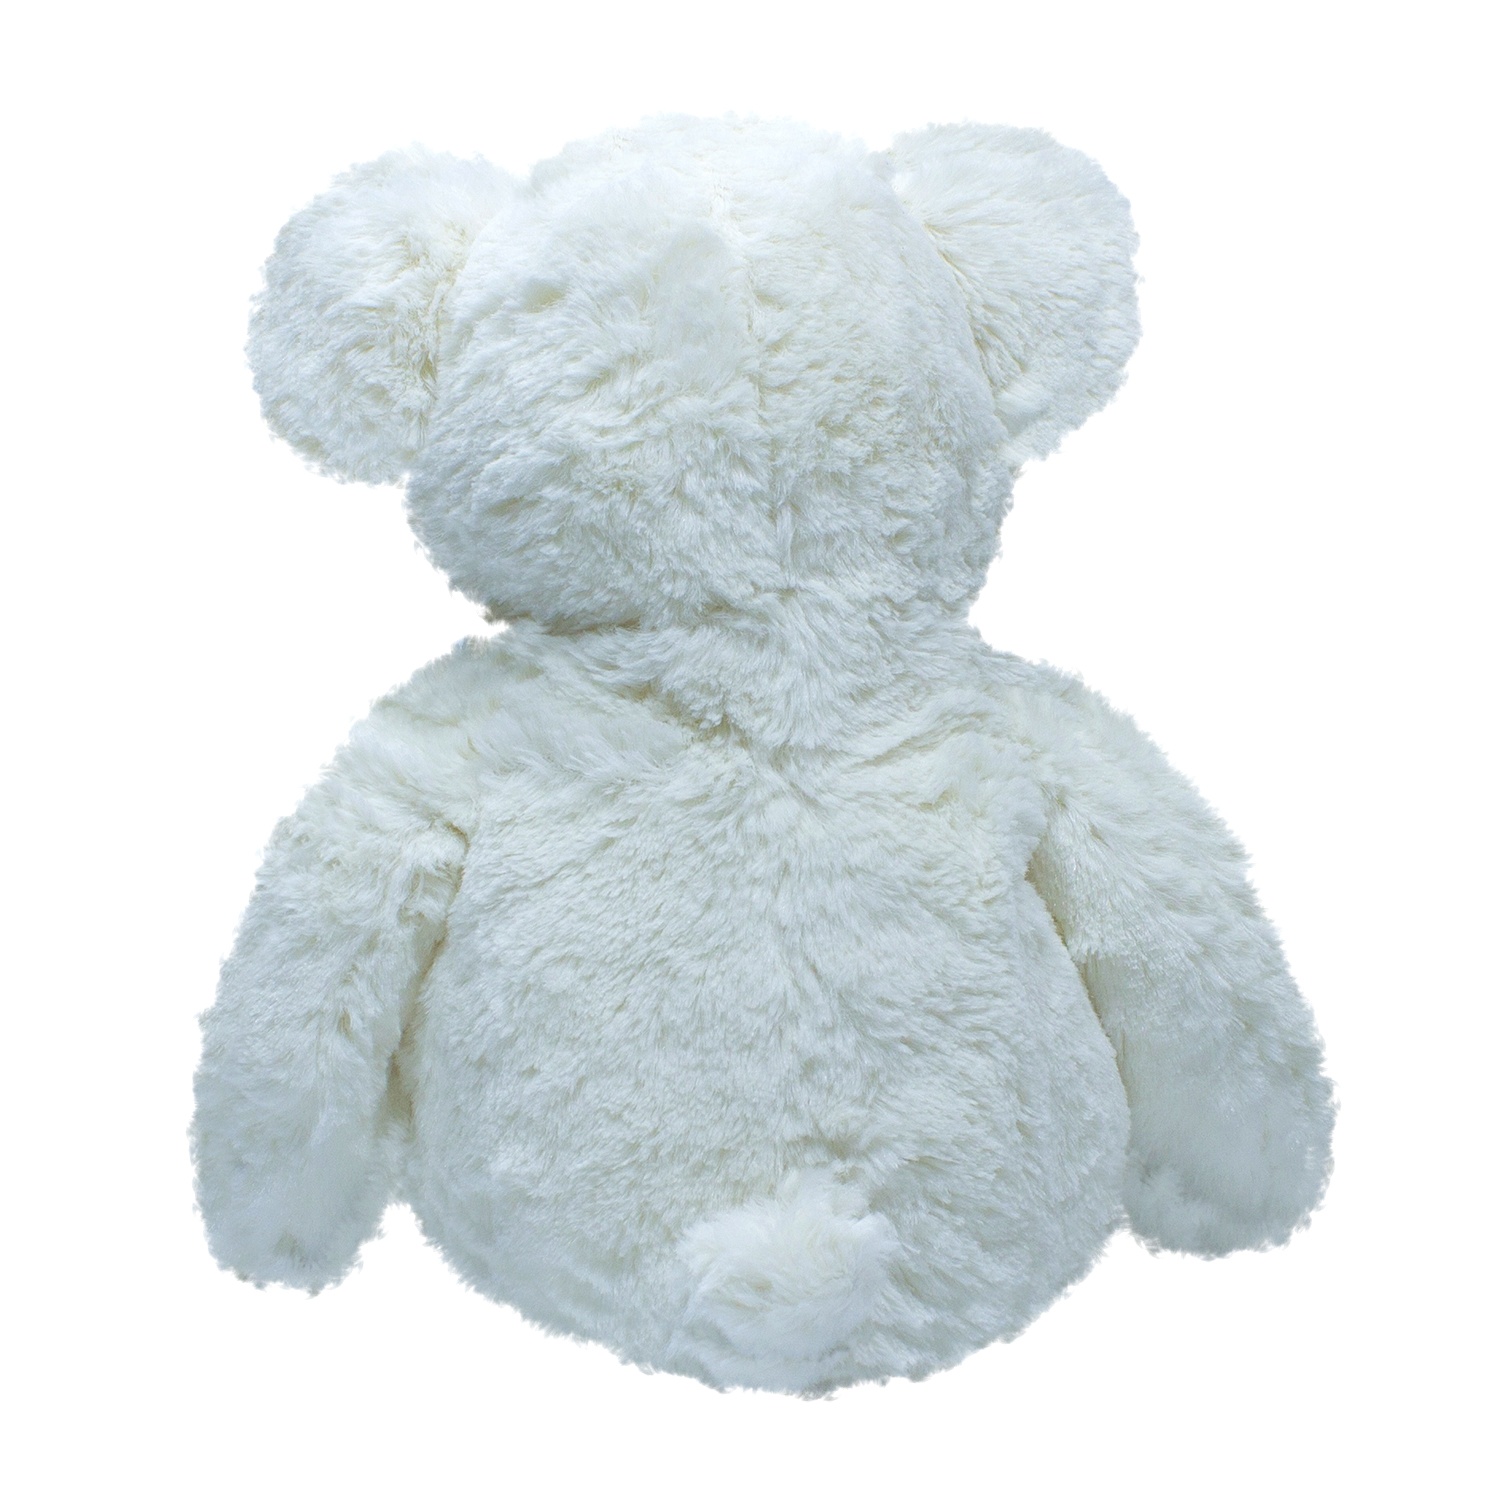 Тедди белый. Мягкая игрушка Teddykompaniet мишка Тедди 28 см, молочный. Мягкая игрушка Teddykompaniet Медвежонок Валле 60 см, серый. Мягкая игрушка Teddykompaniet мишка Тотти 28 см, кремовый.